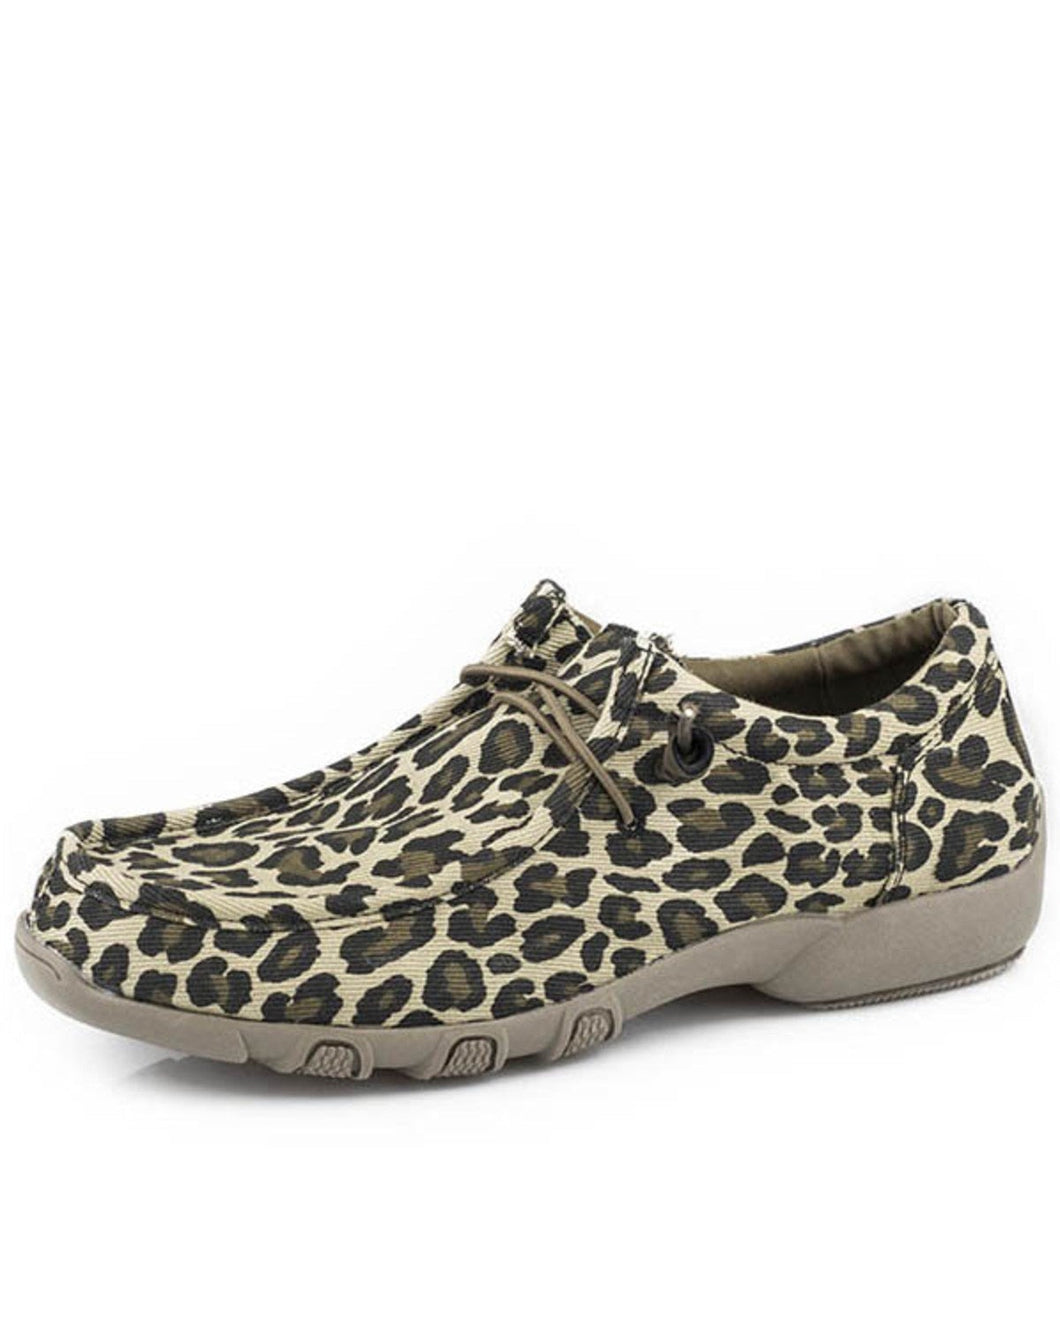 Roper Leopard Slip On Ladies' Casual Shoe